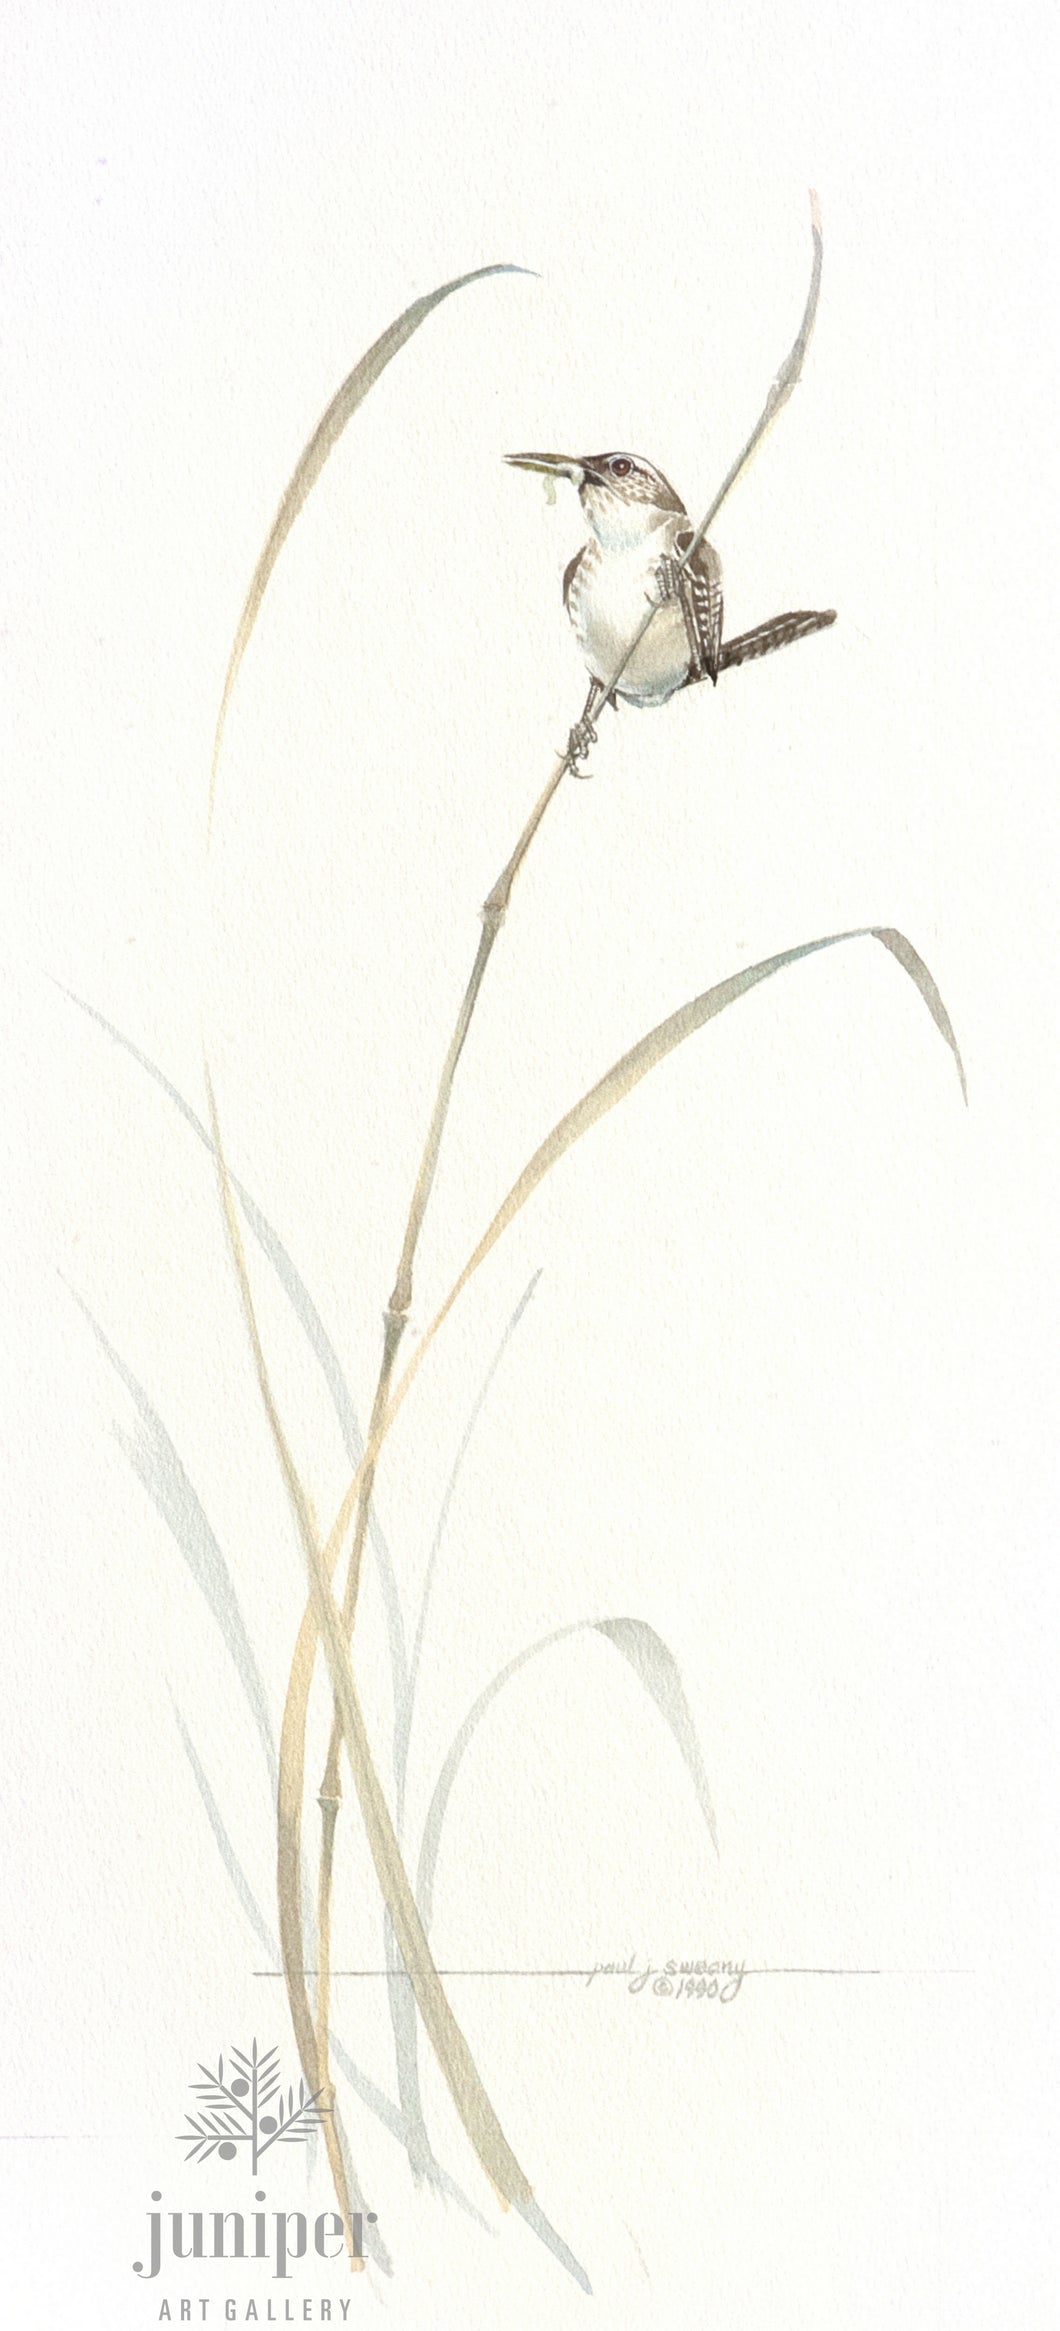 Marsh Wren by Paul J Sweany, reproduction from original watercolor 